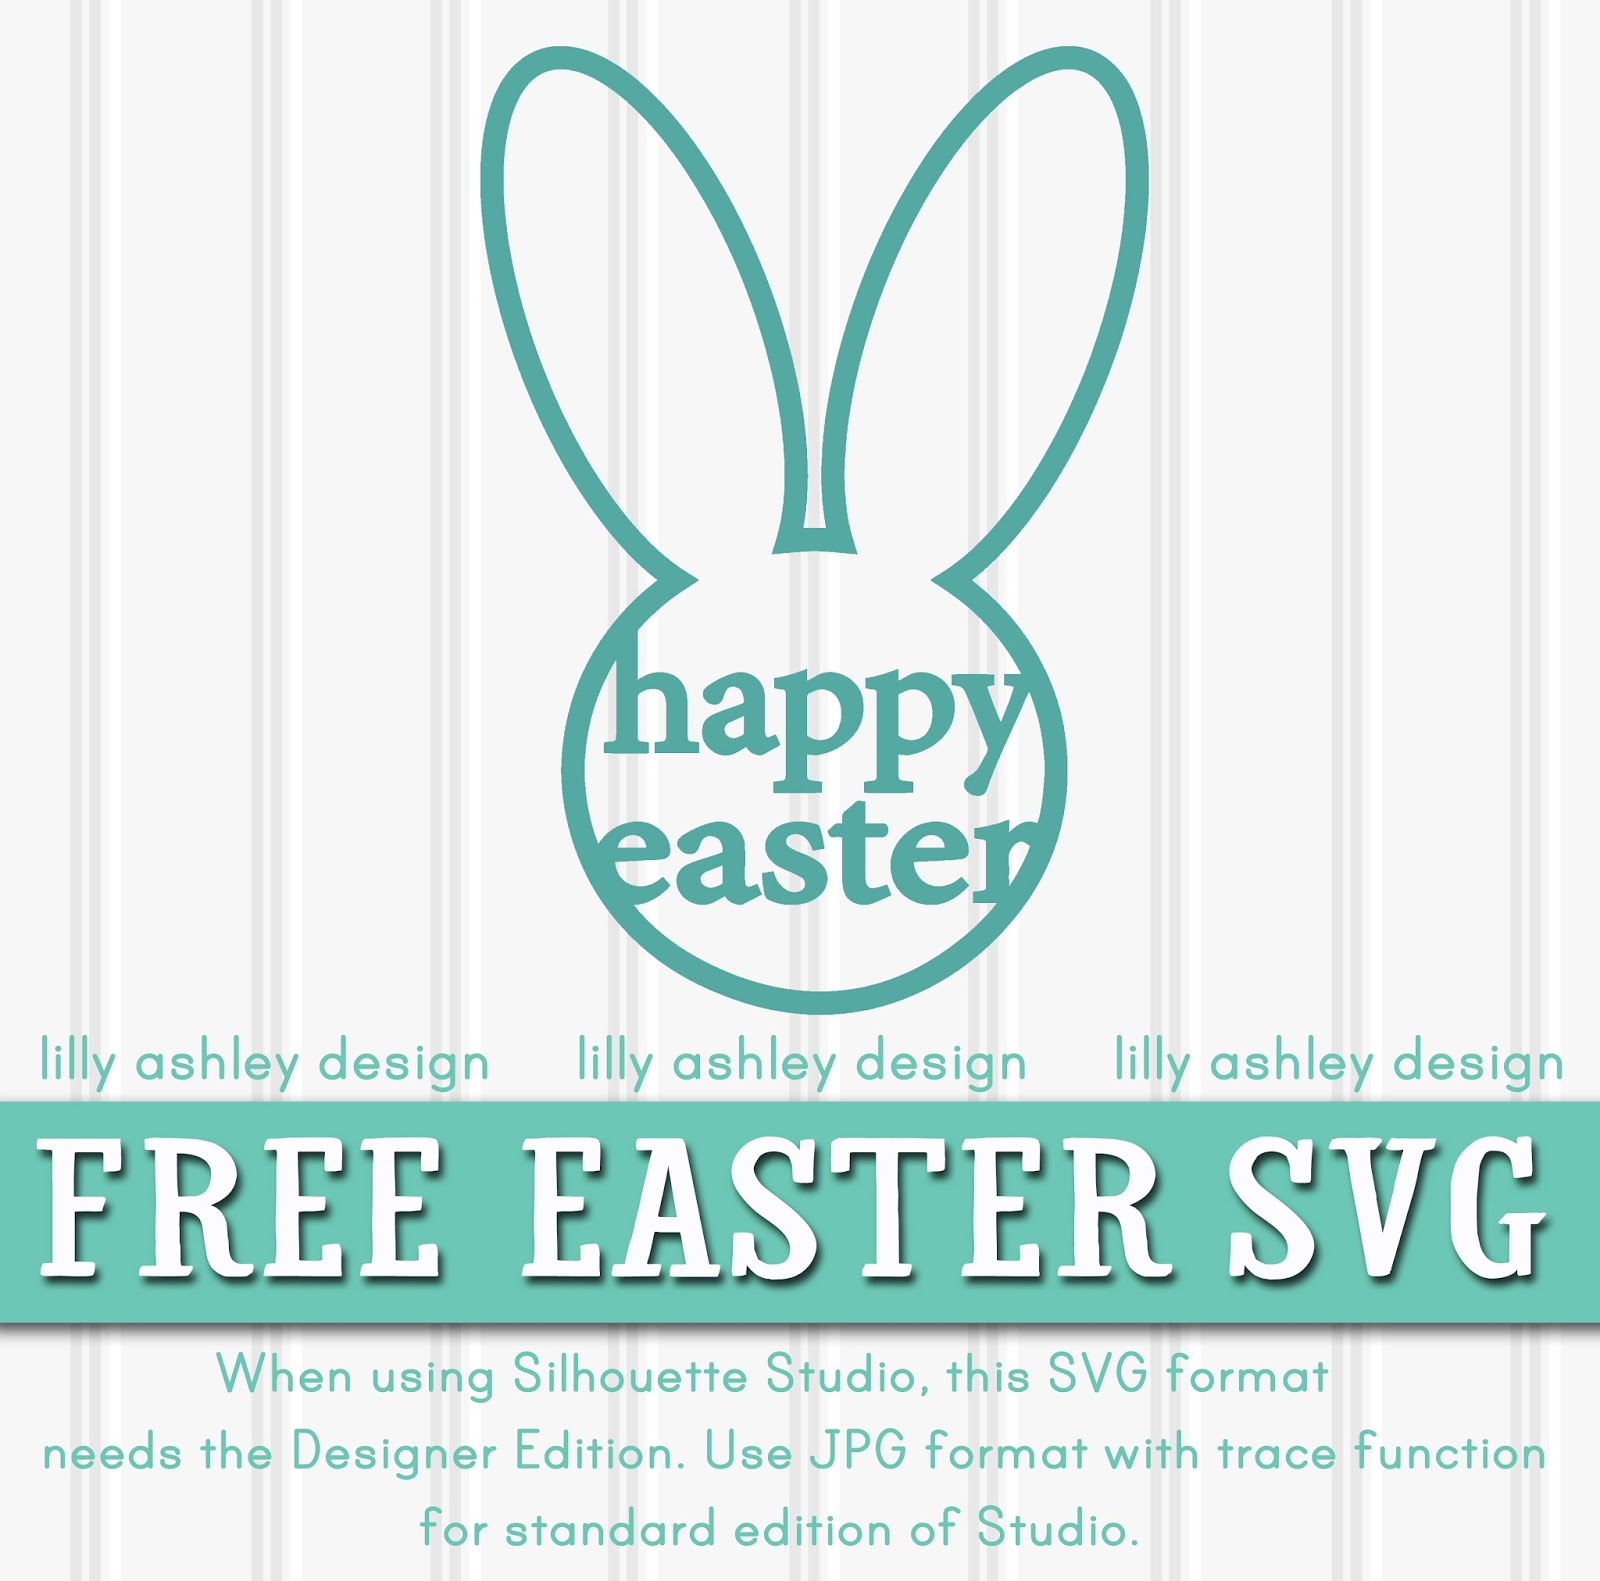 Make it Create by LillyAshley...Freebie Downloads: Free Easter SVG Cut File